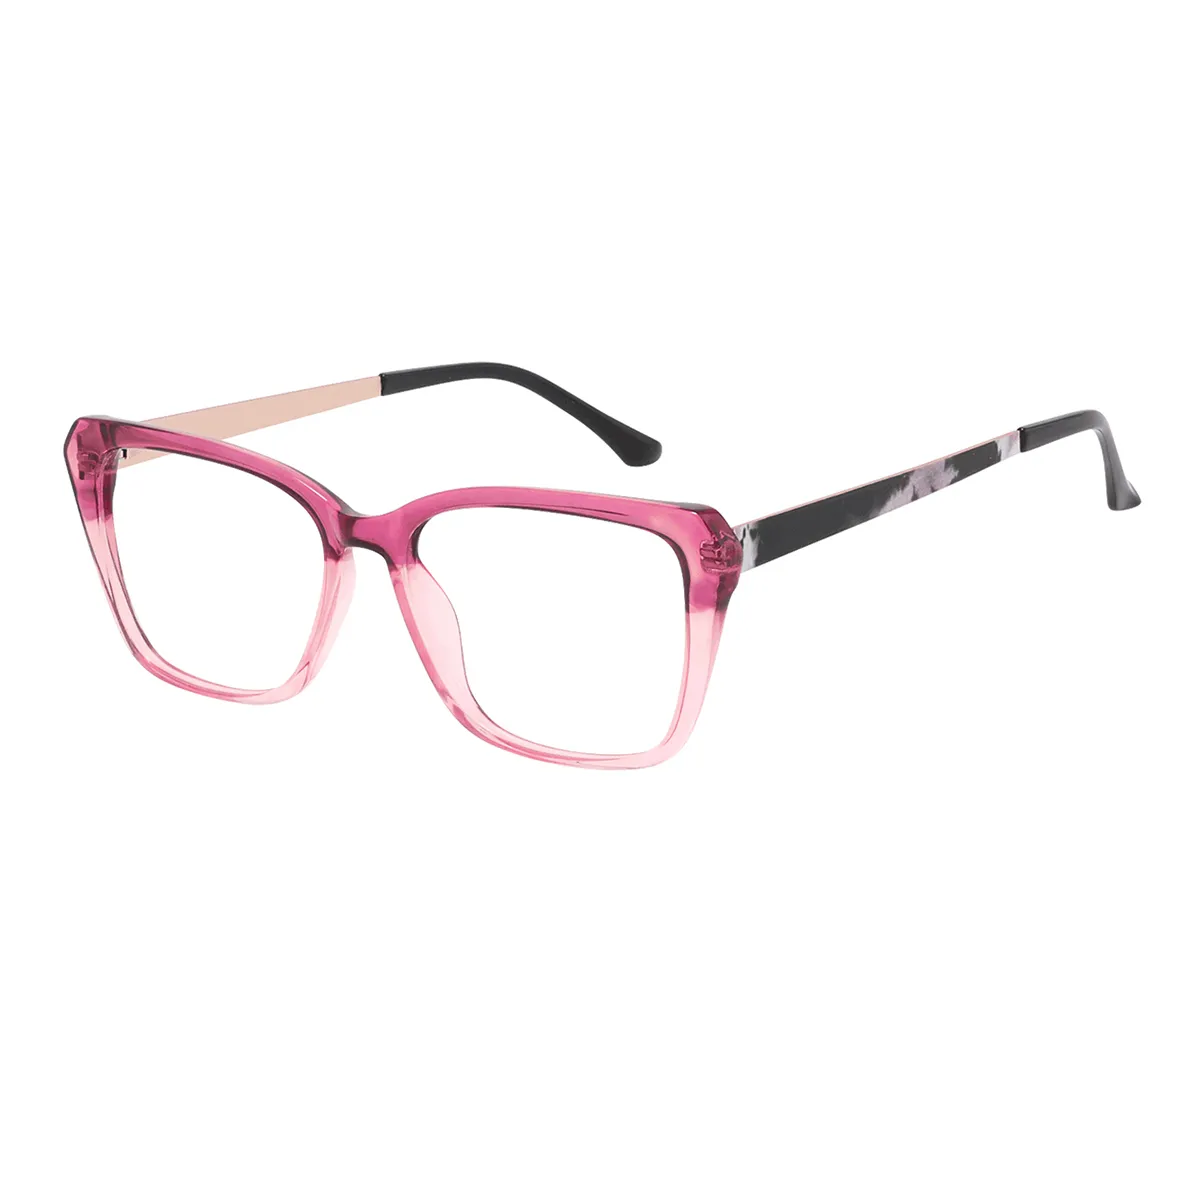 Kinney - Square Transparent-pink Glasses for Women - EFE